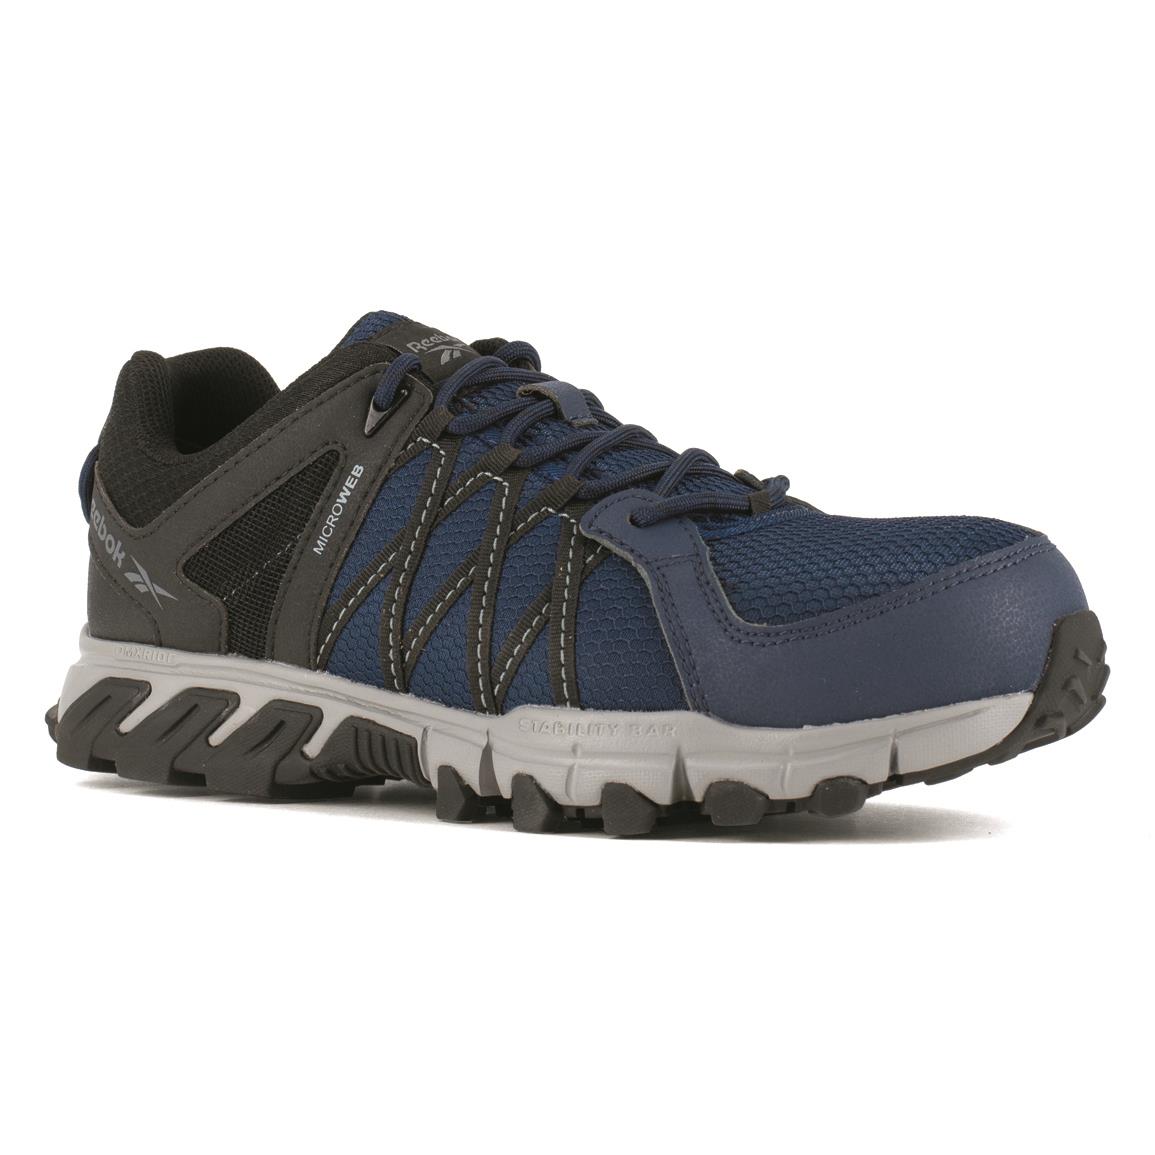 Reebok Men's Trailgrip Comp Toe Ahtletic Work Shoes, Navy/black/gray